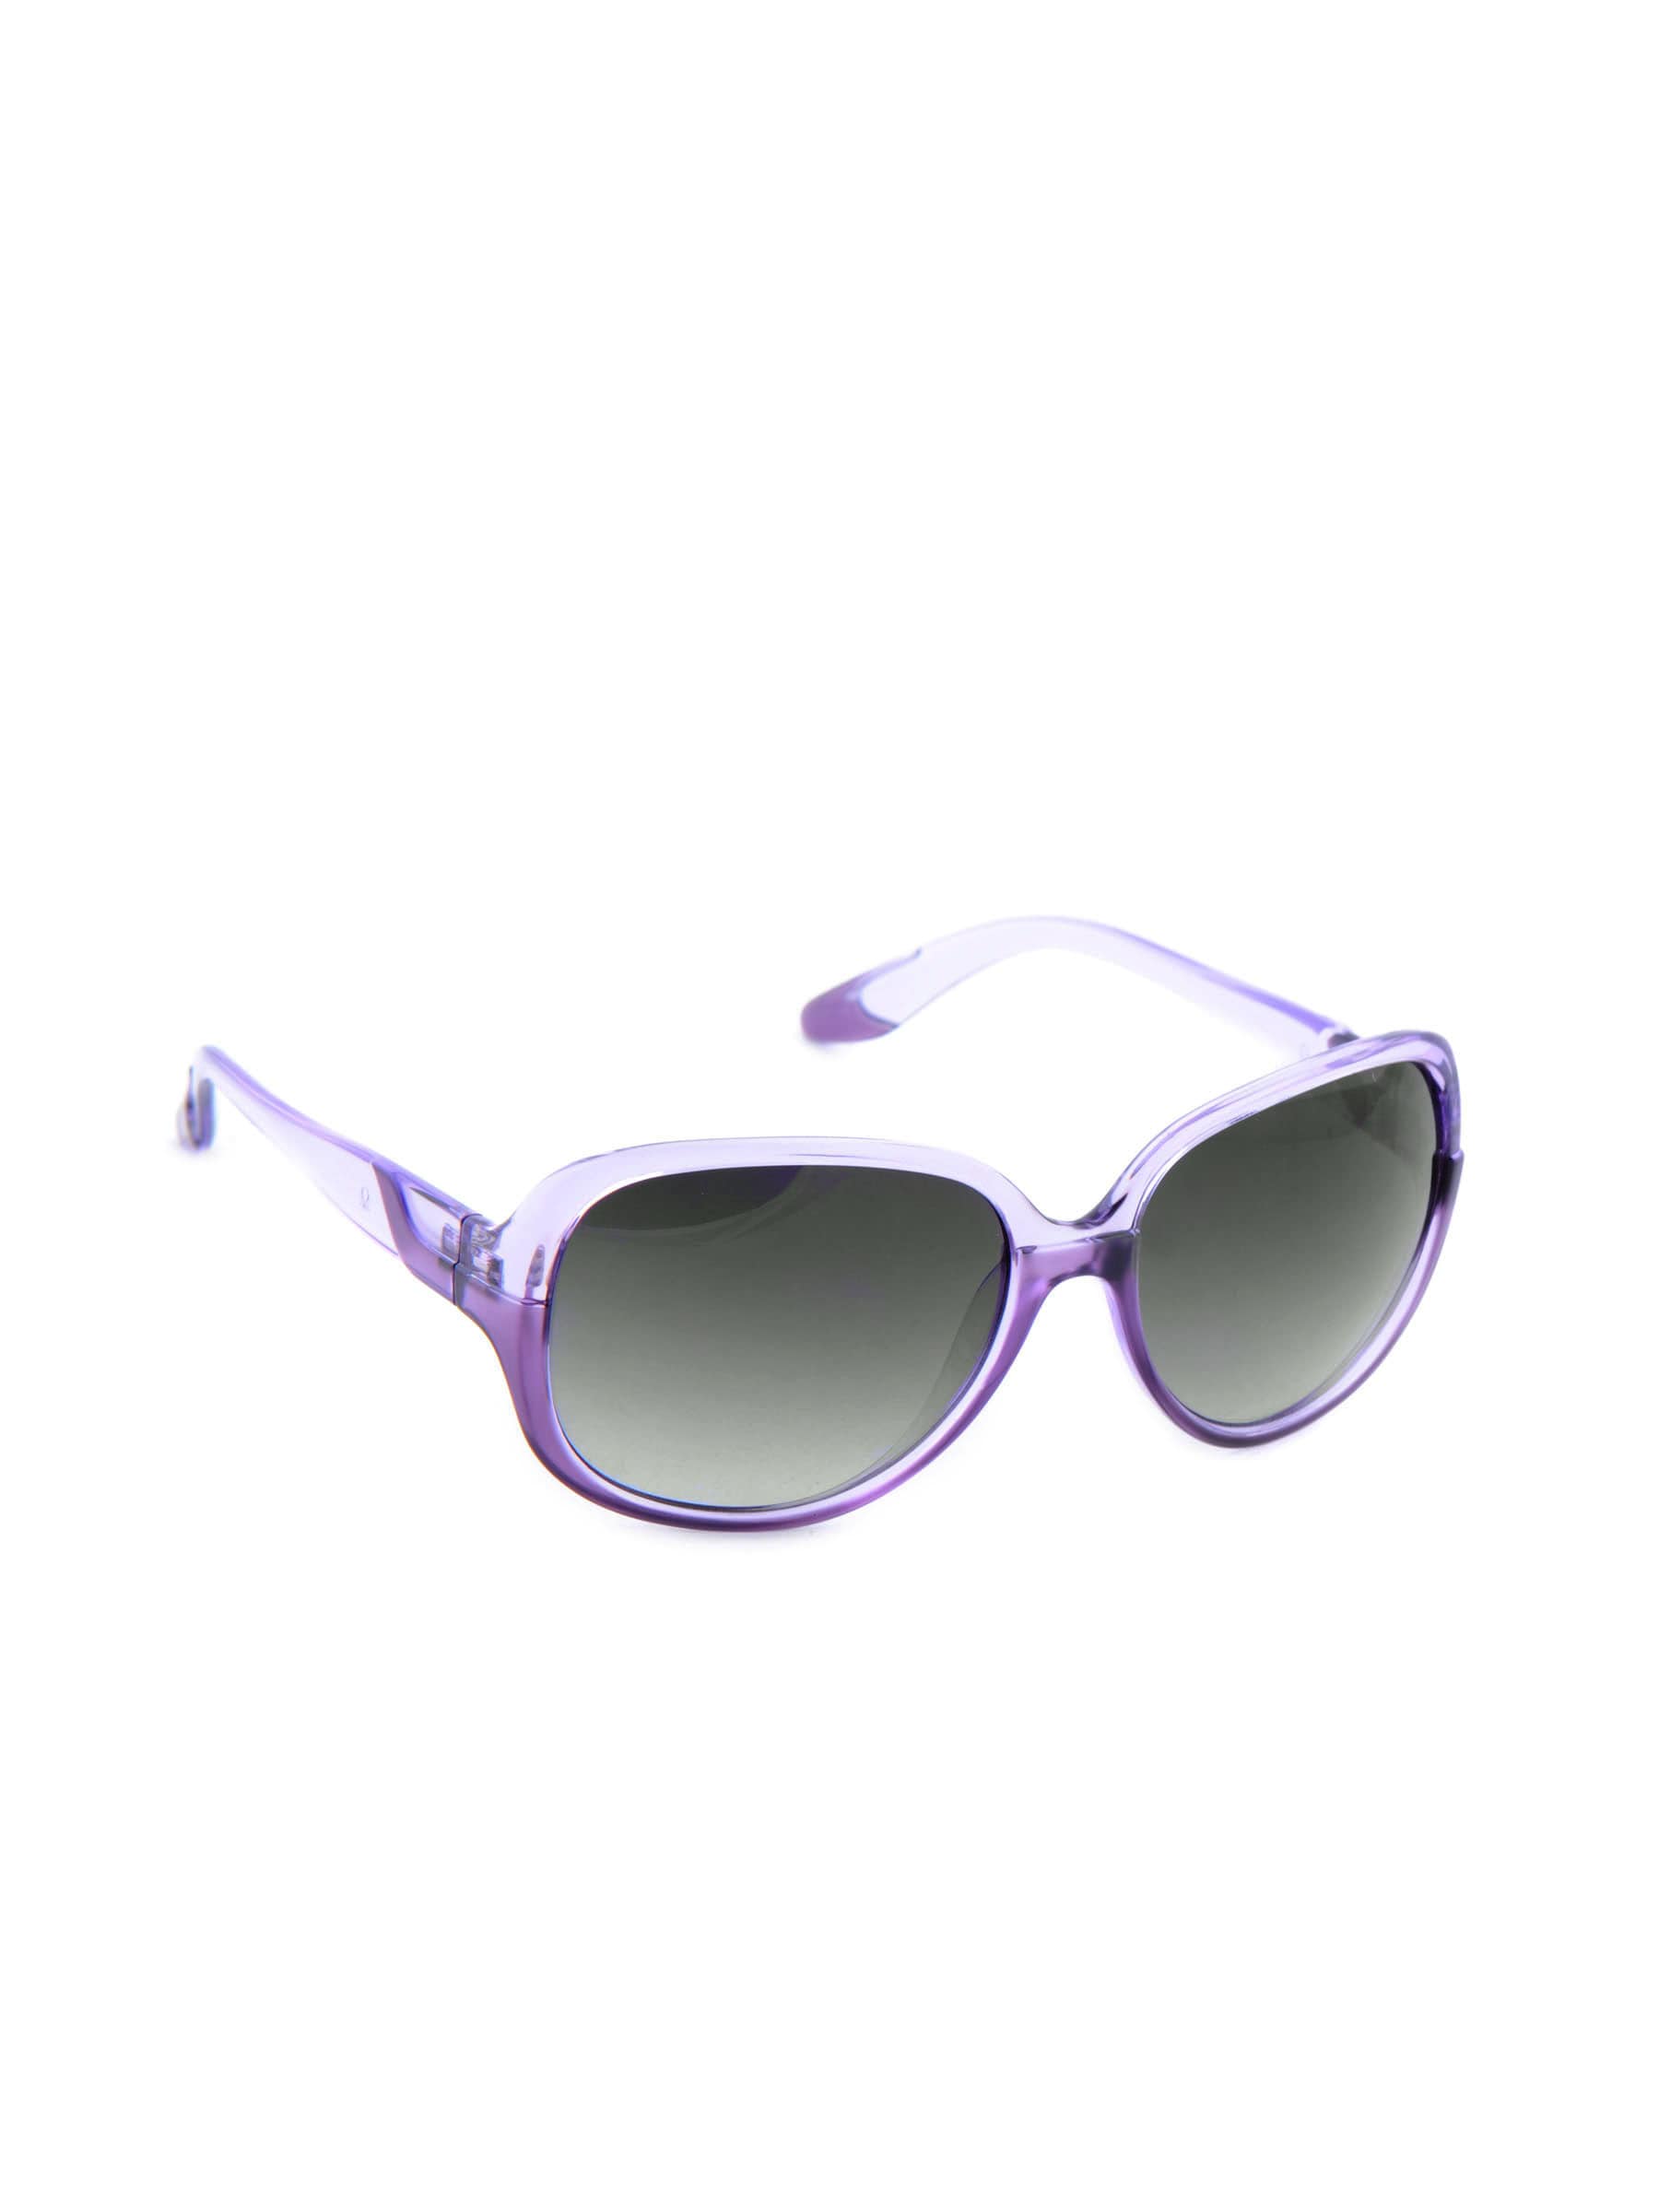 United Colors of Benetton Women Funky Eyewear Purple Sunglasses